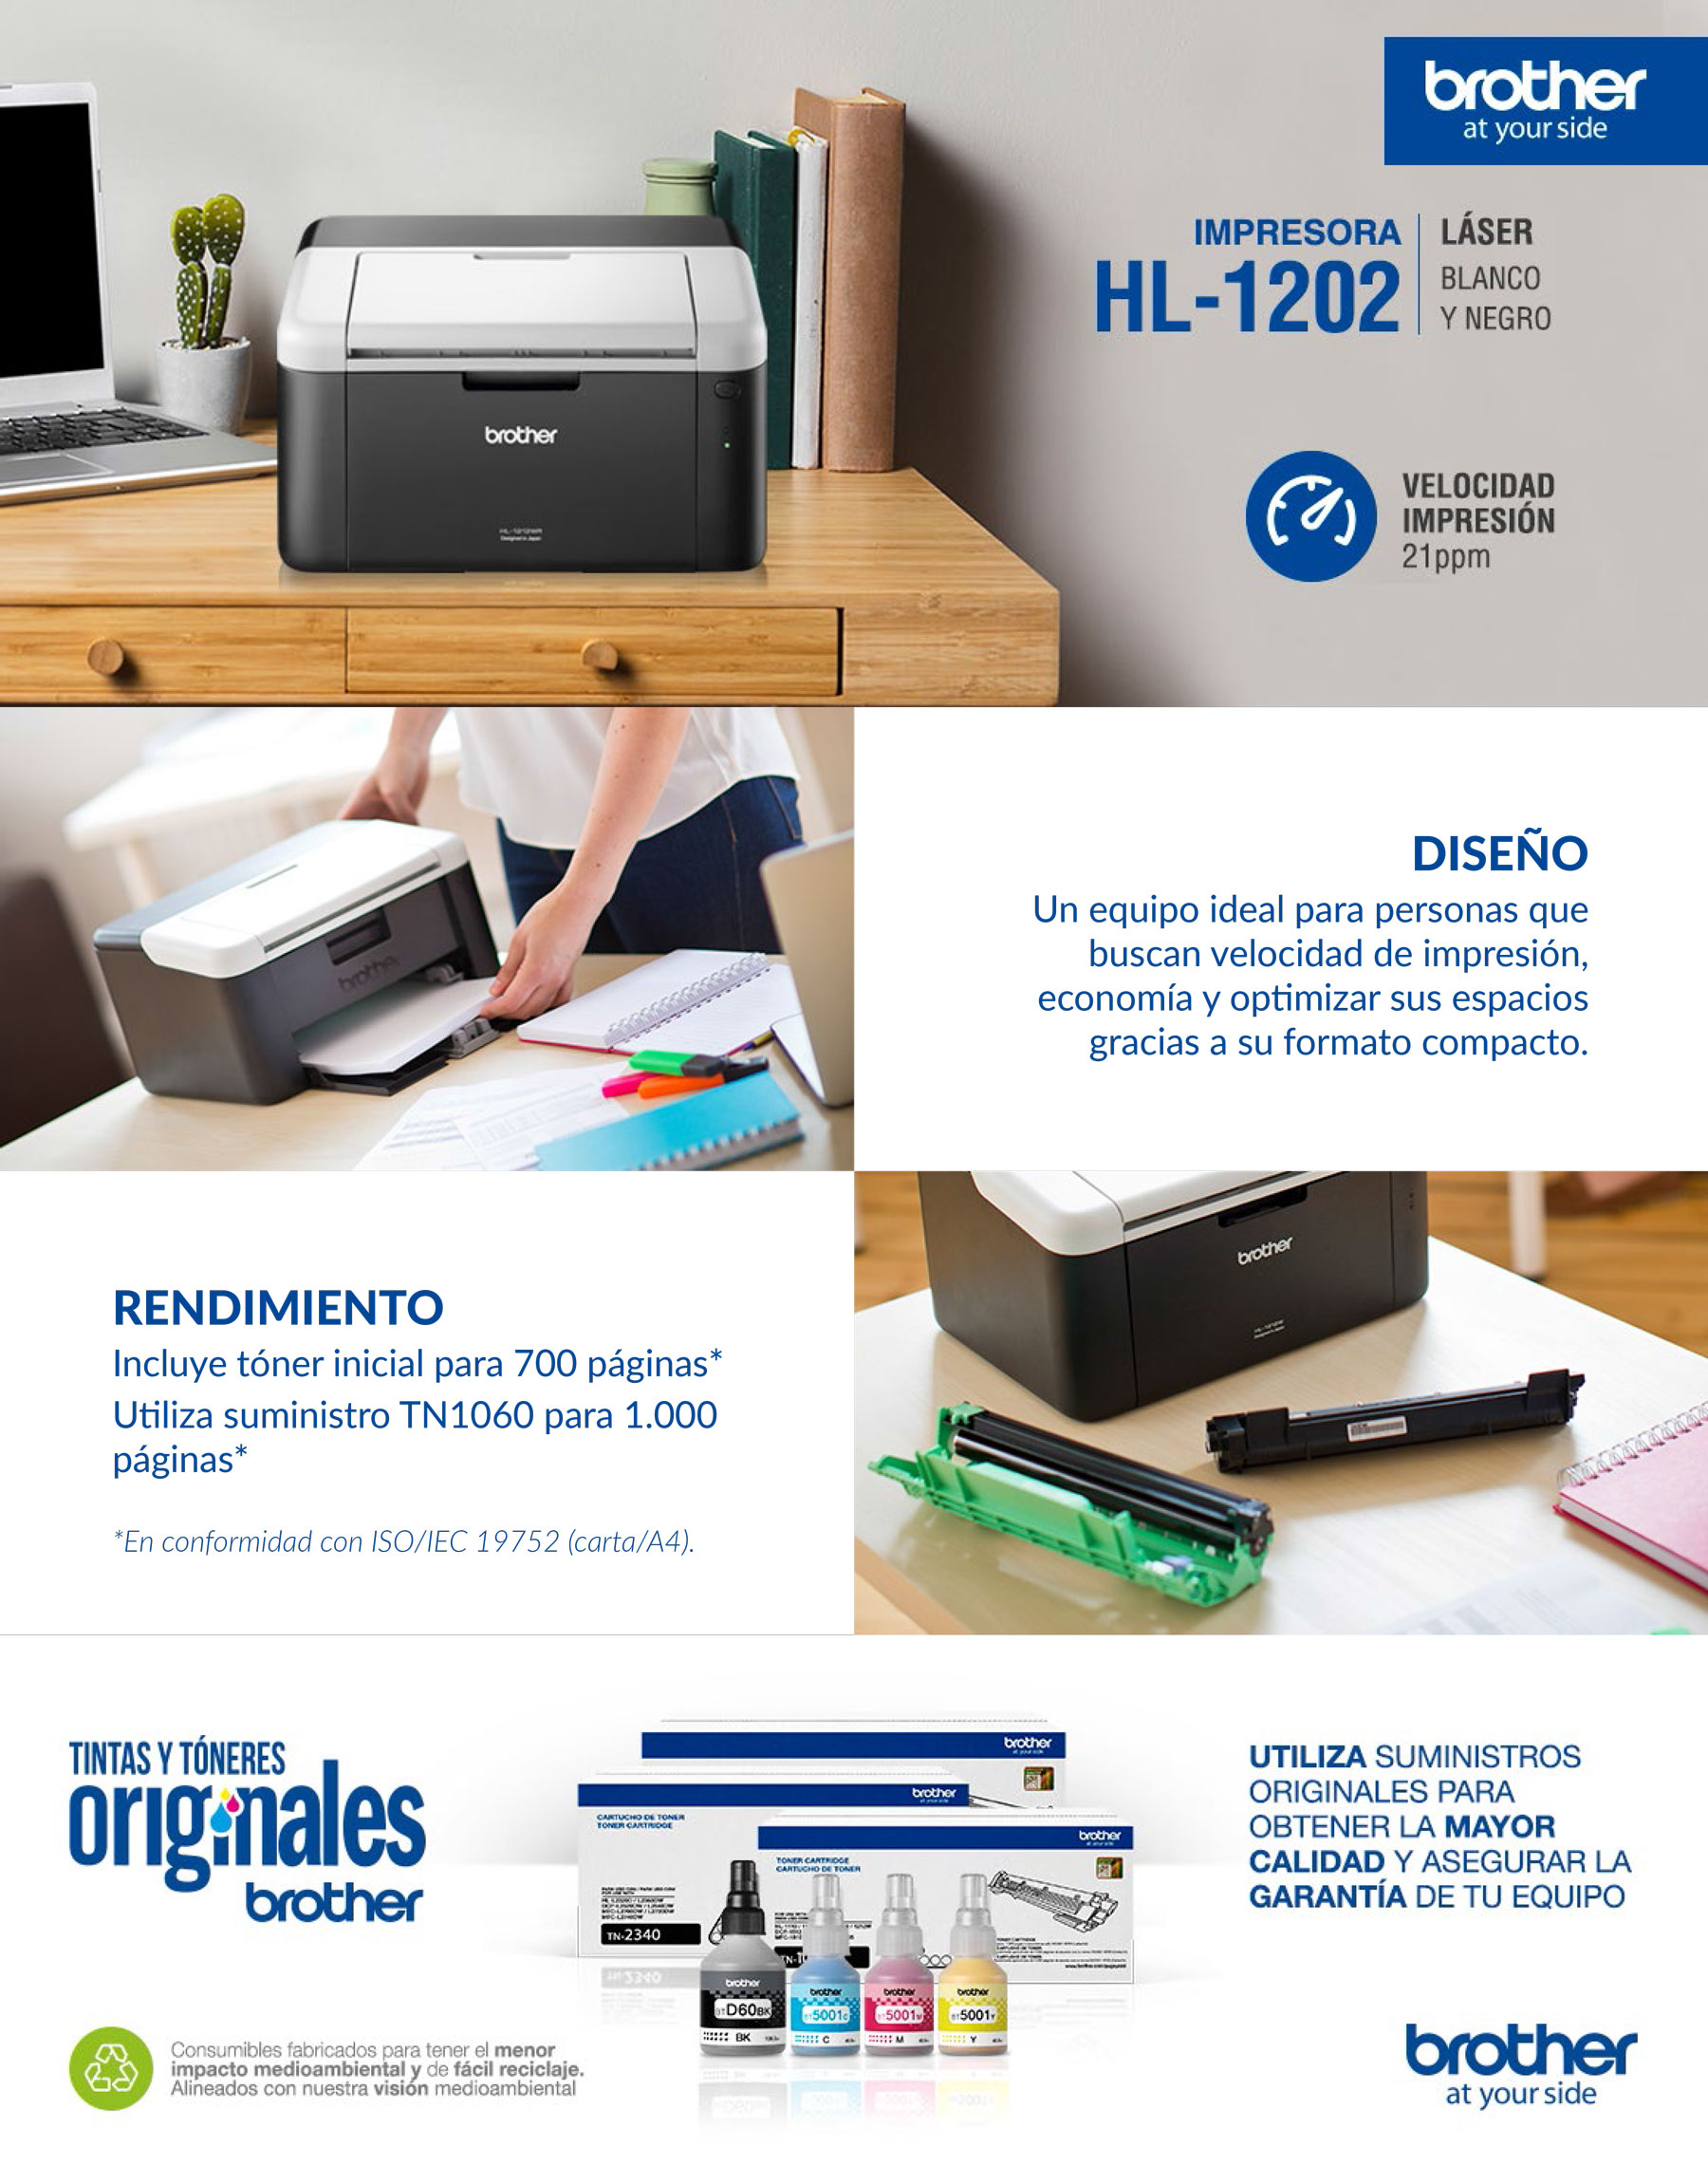 Brother Impresora Láser Blanco y Negro HL-1202